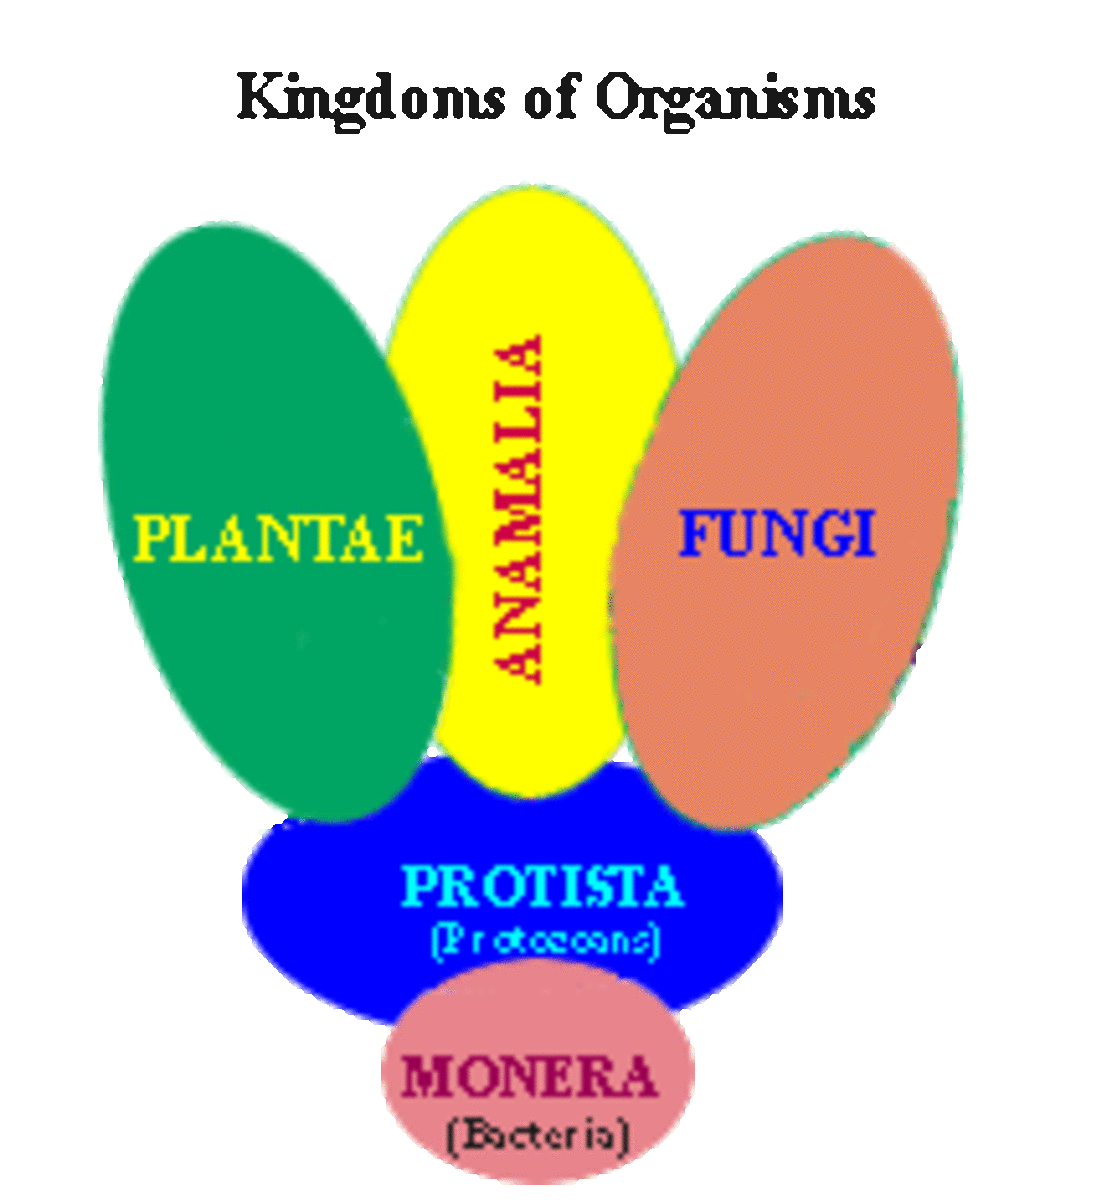 The FIVE KINGDOM classification